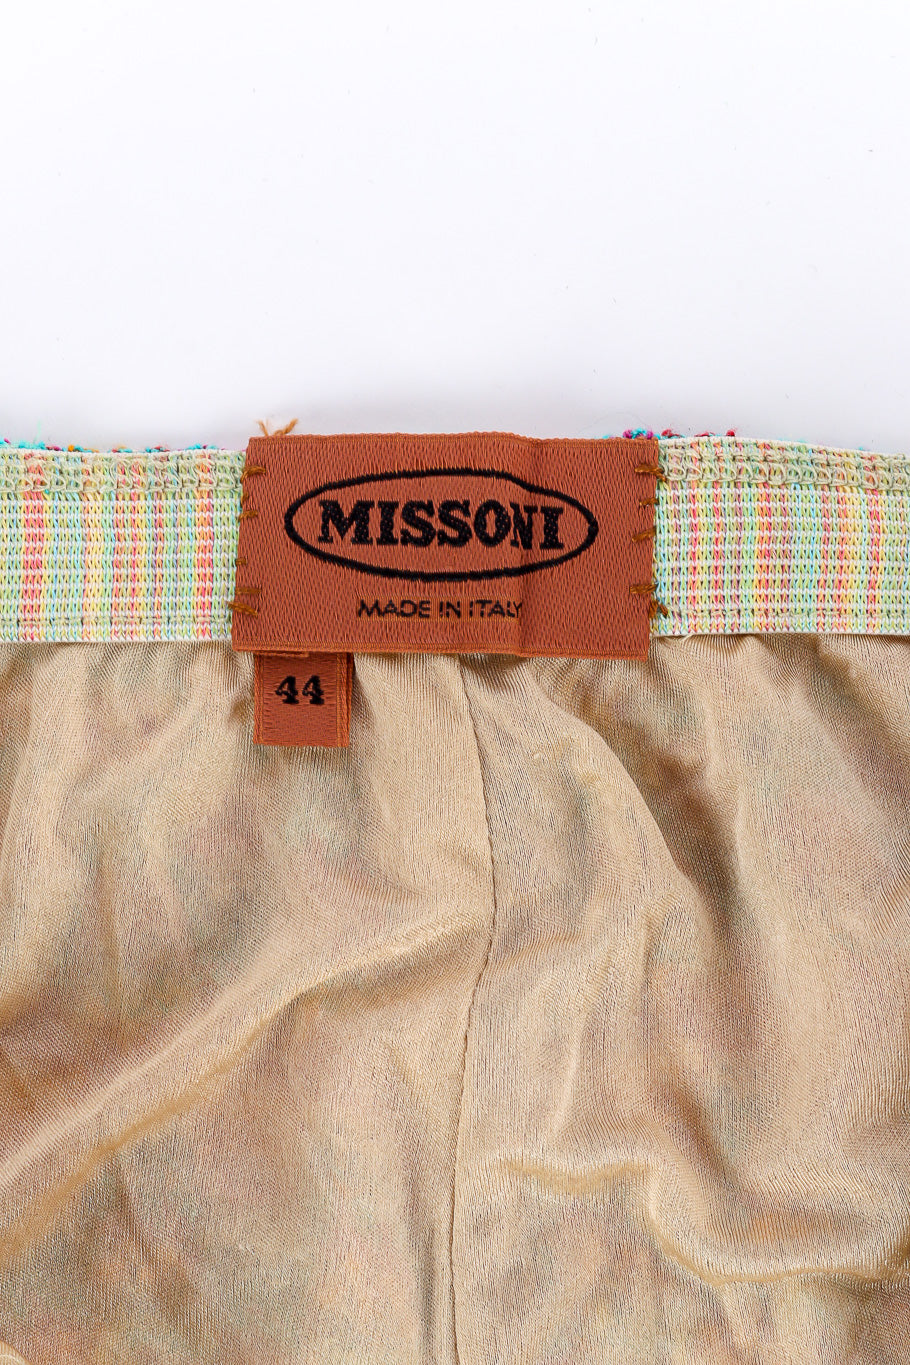 Scallop stripe classic knit 2 piece set by Missoni skirt tag @recessla